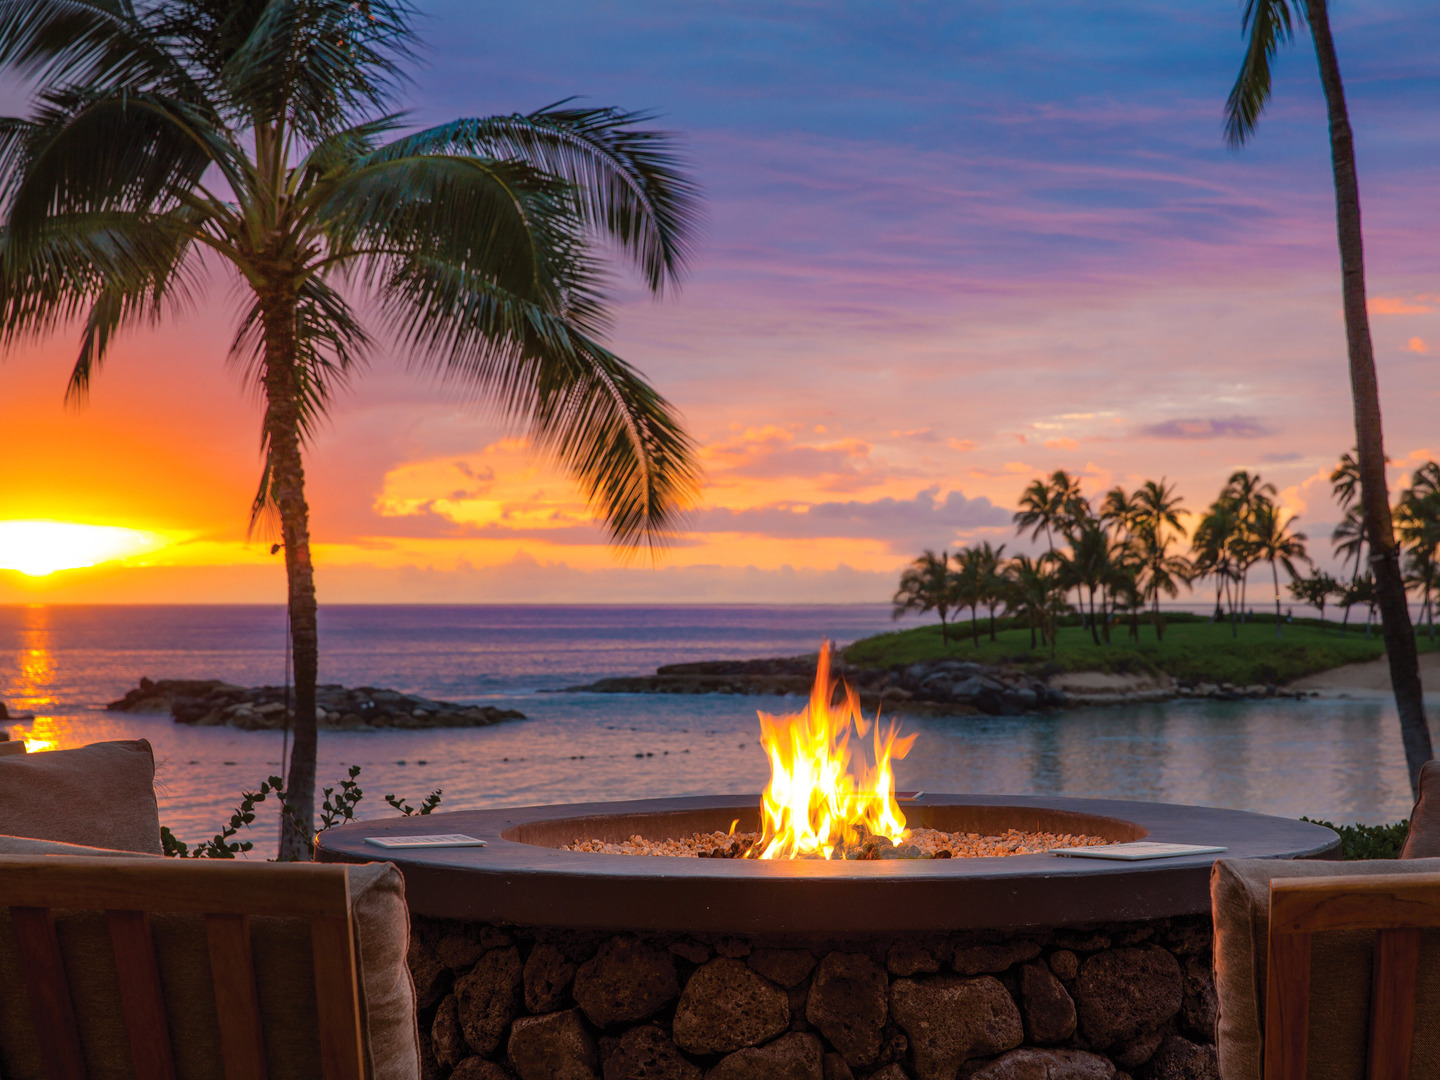 Marriott's Ko Olina Beach Club Resort Fire Pit, Sunset View. Marriott's Ko Olina Beach Club is located in Kapolei, O‘ahu, Hawai‘i United States.